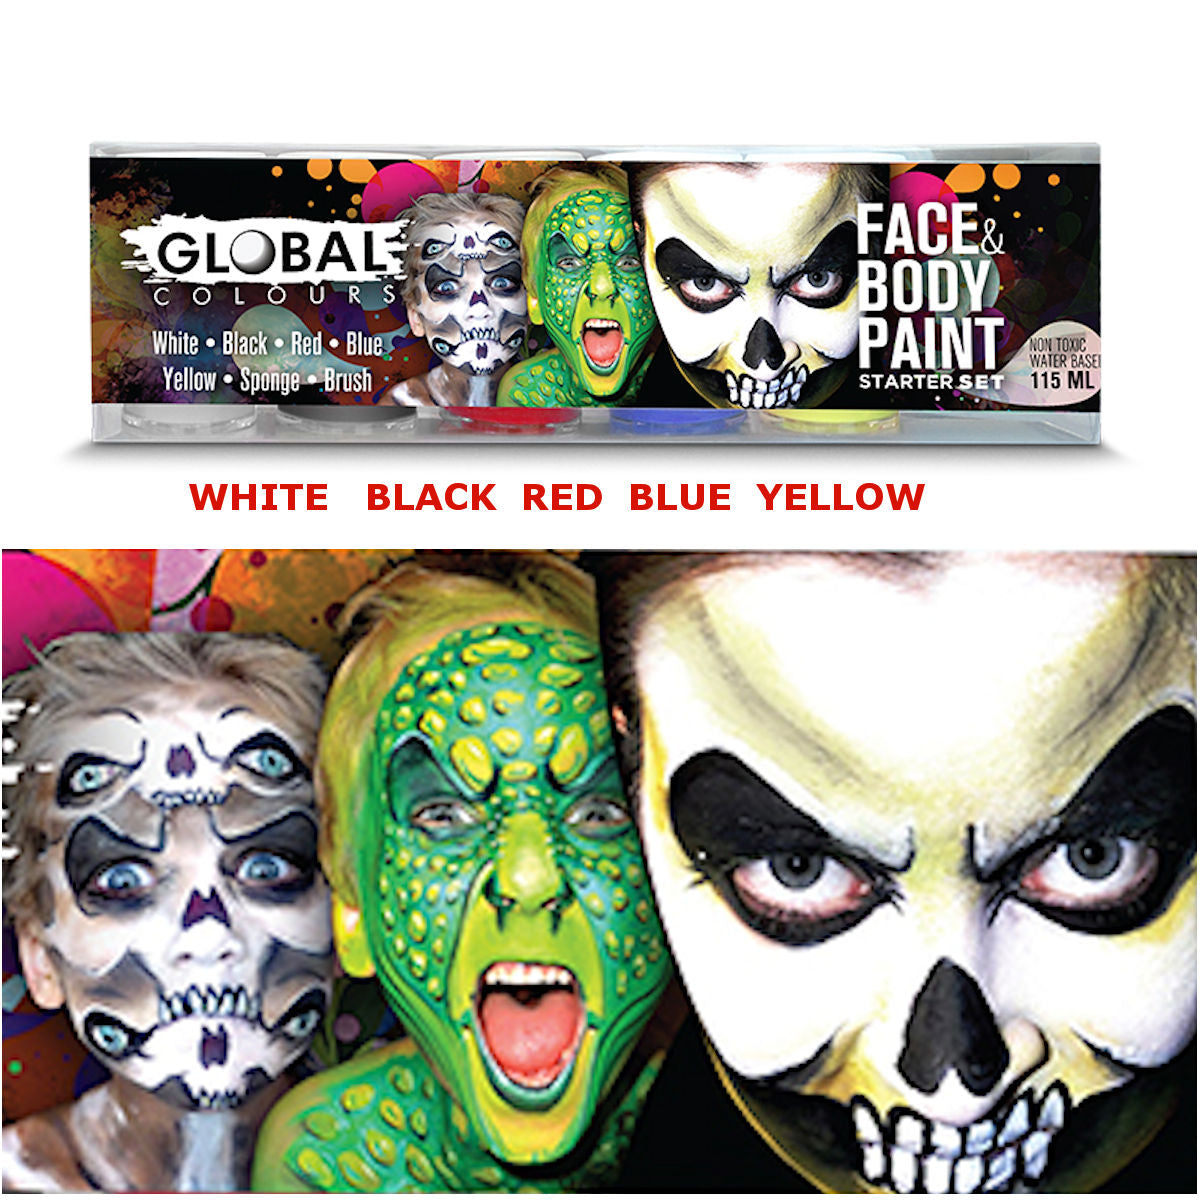 Face & Body Paint Starter Set Global Bodyart Makeup Special FX Set of 5x Paints